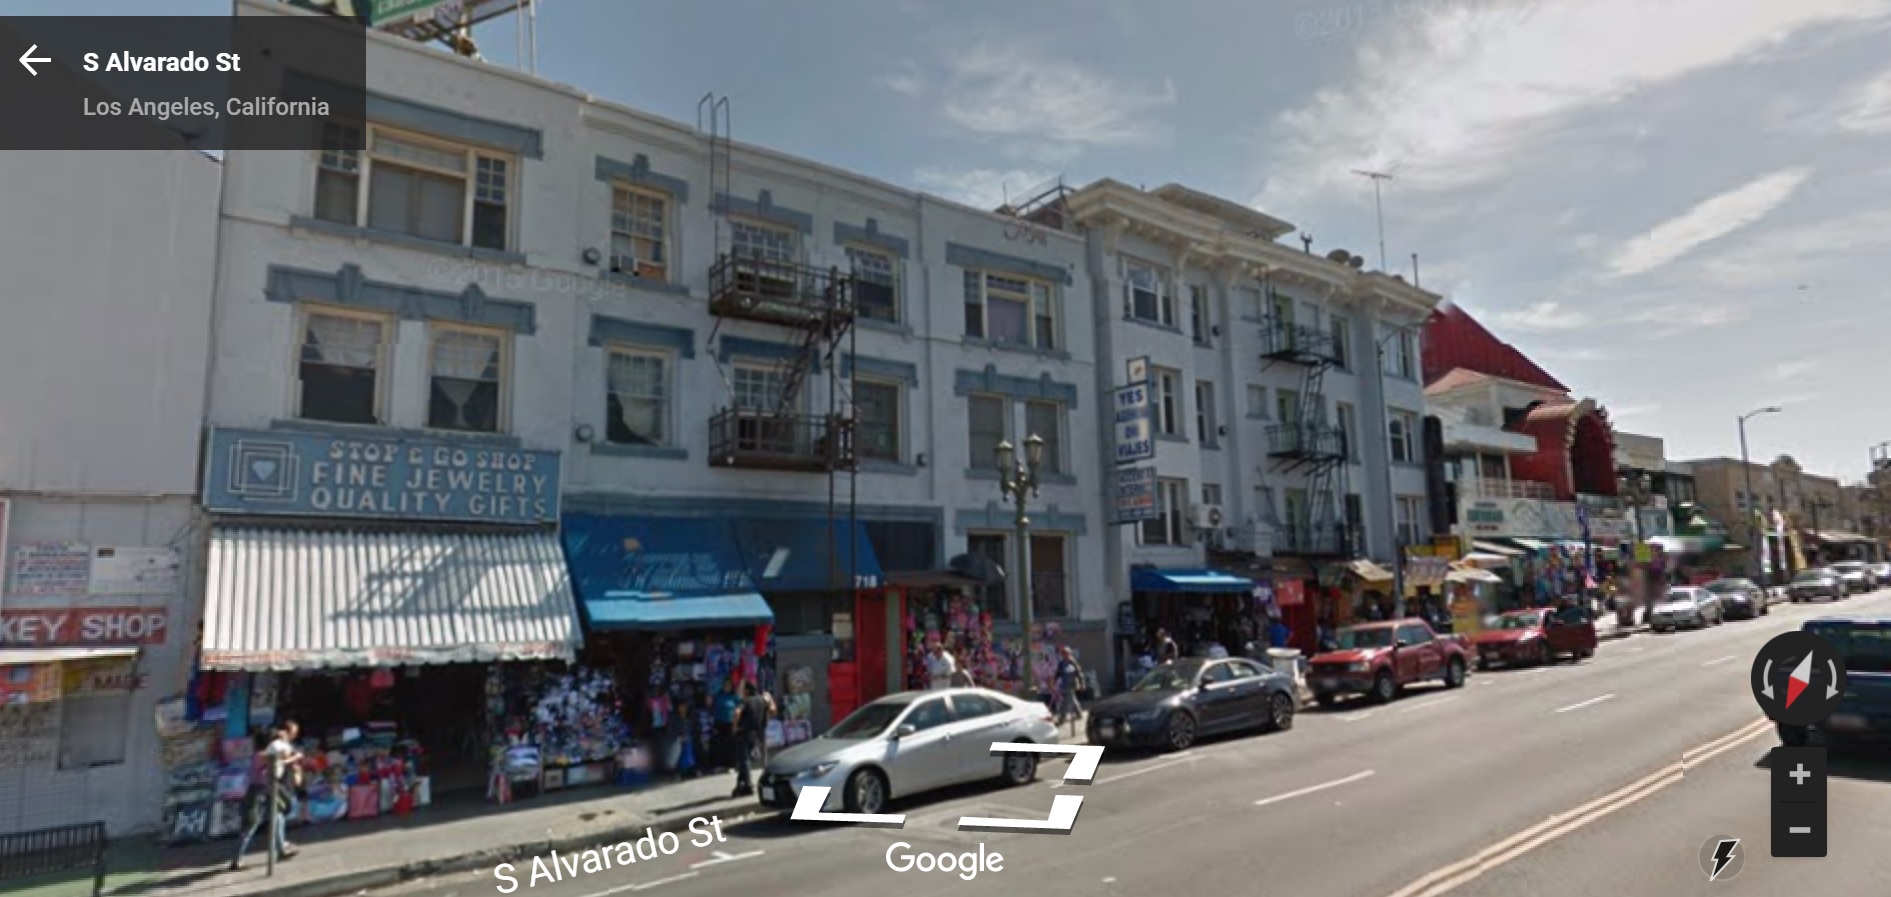 Avarado Street between 6th and 7th. Image via Google street view